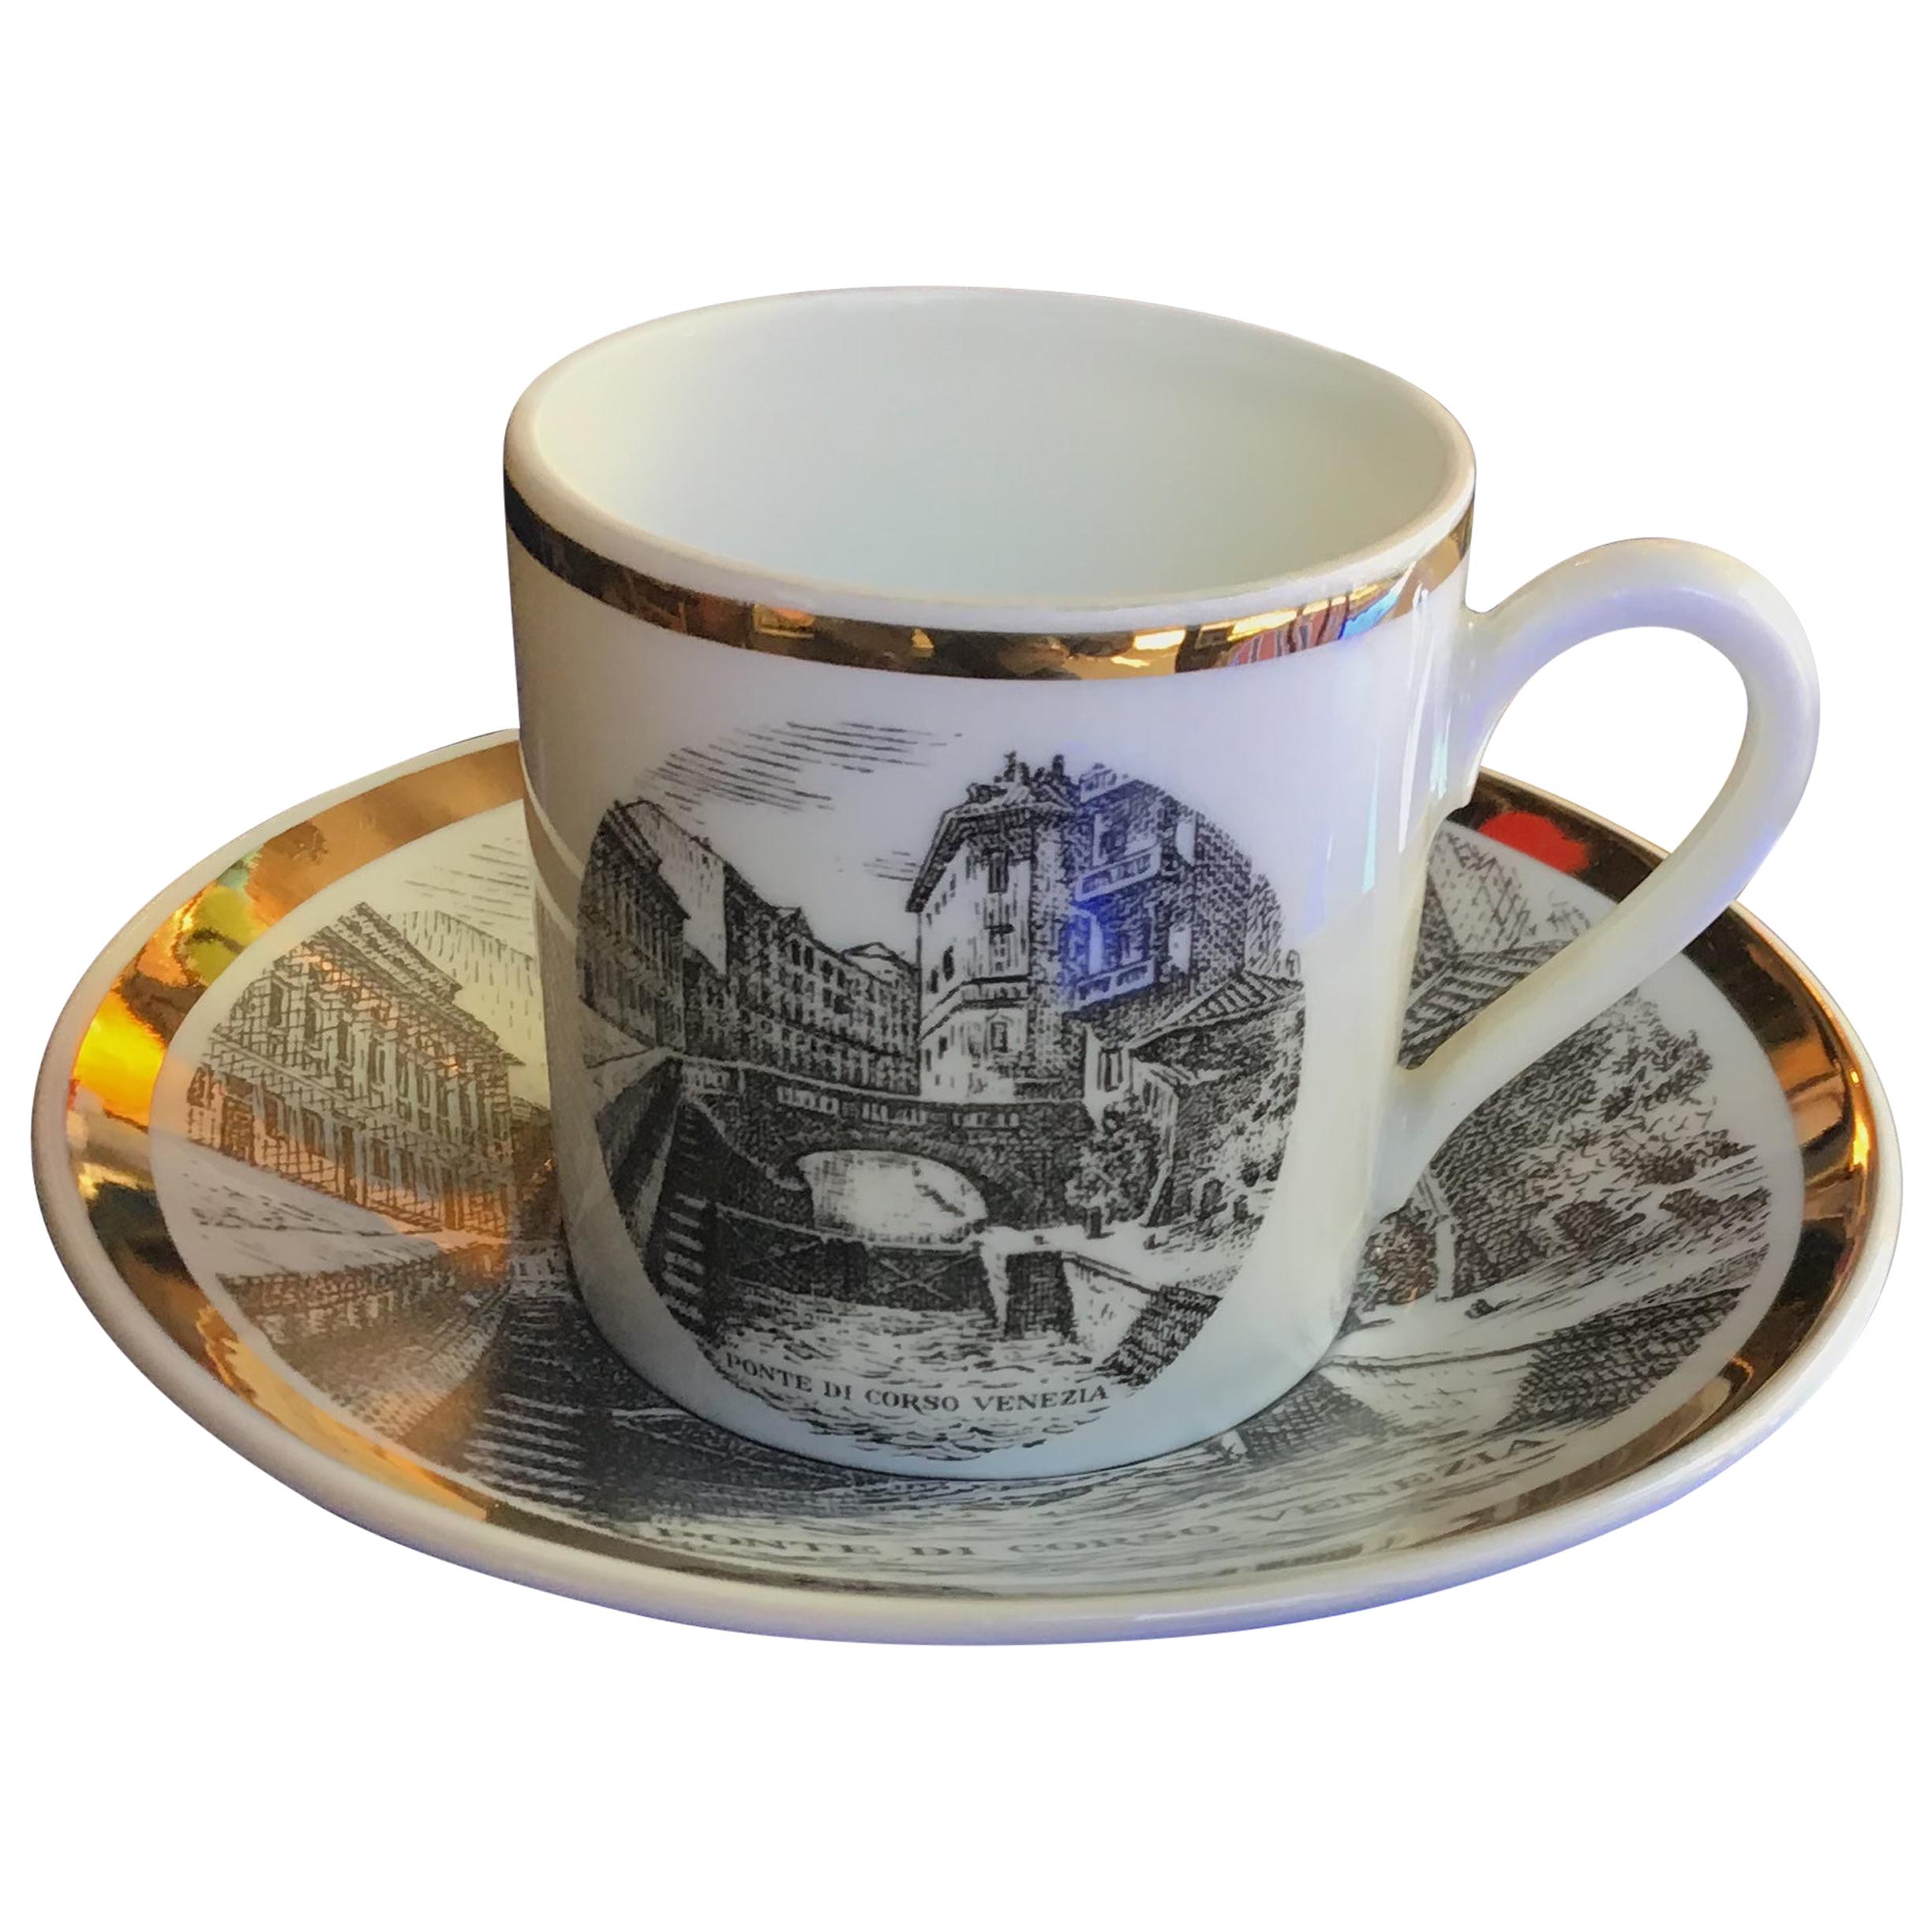 Fornasetti Porcelain Cup of Coffee Gold “Ponte Corso Venezia”, 1950 For Sale